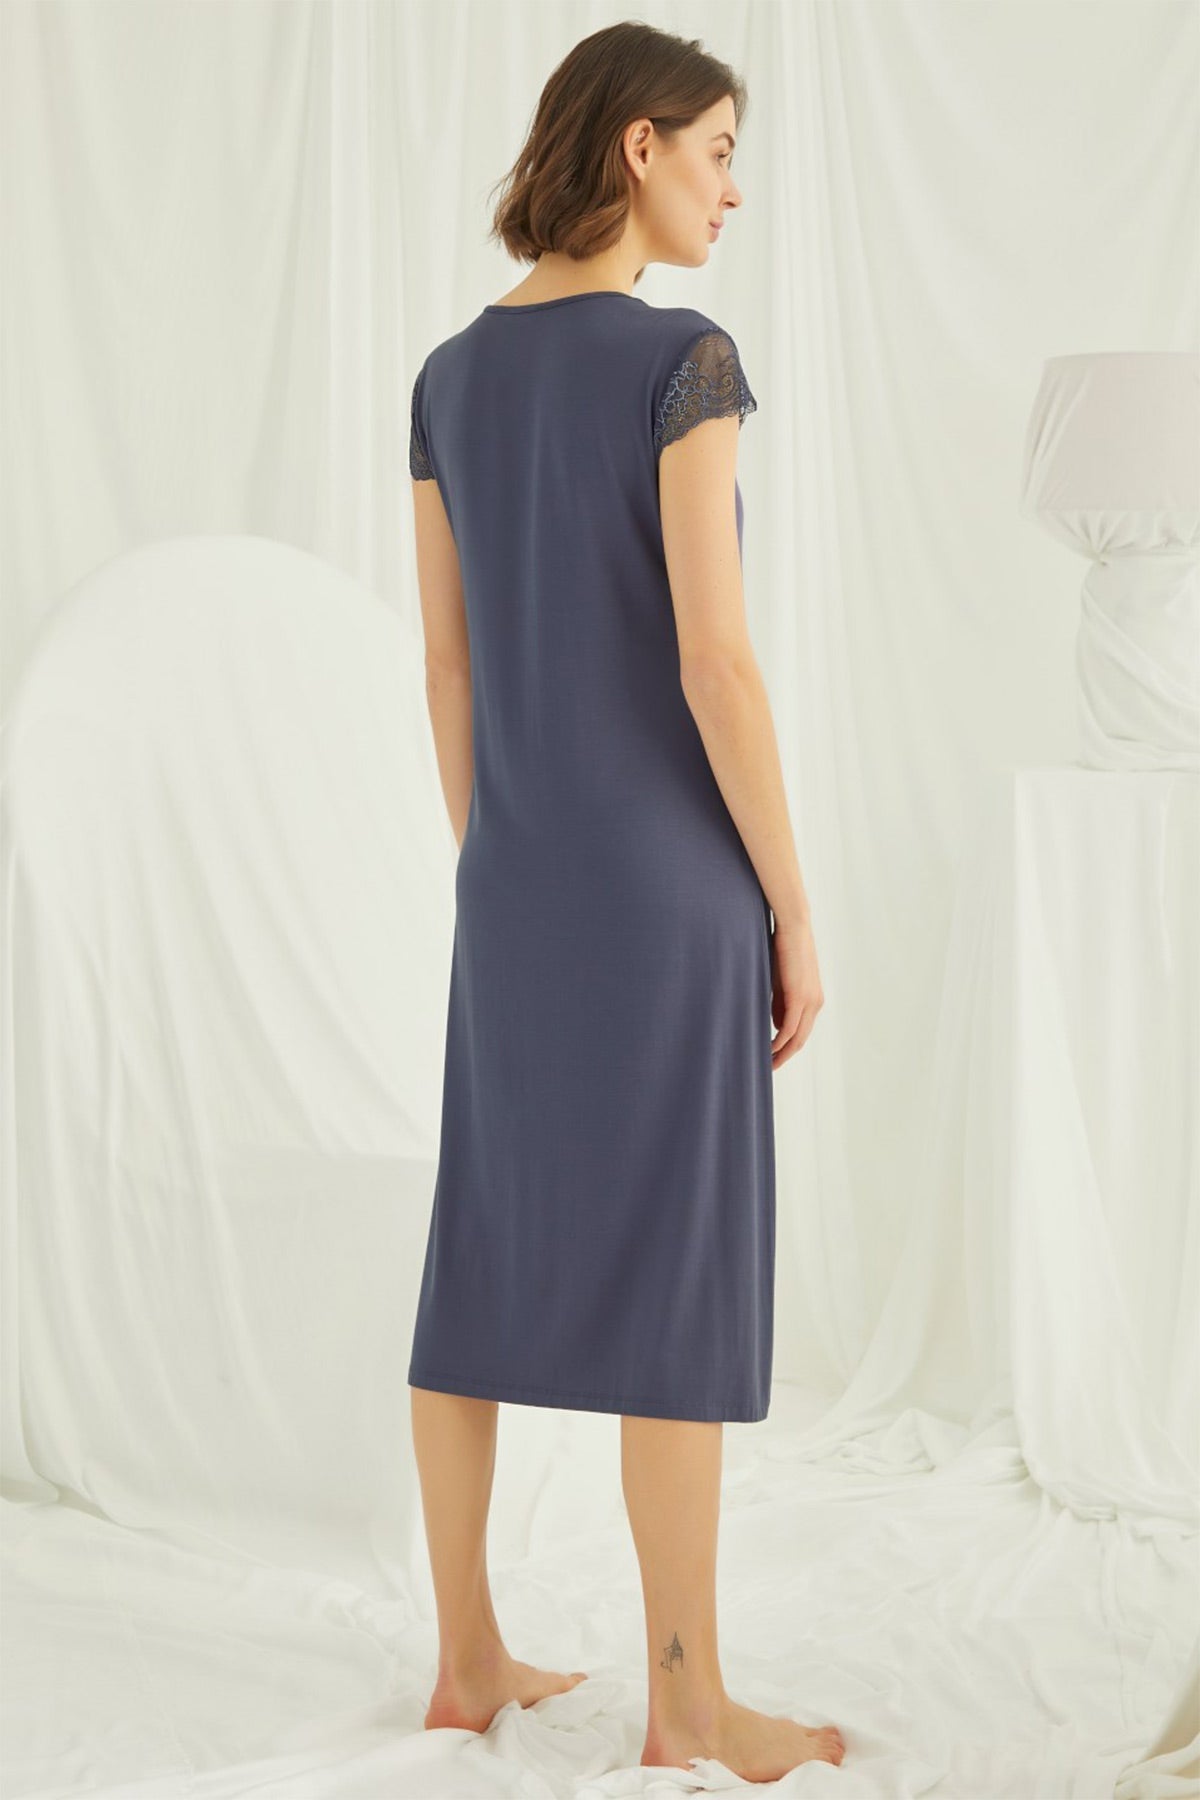 Shopymommy 18454 Lace V-Neck Plus Size Maternity & Nursing Nightgown Navy Blue